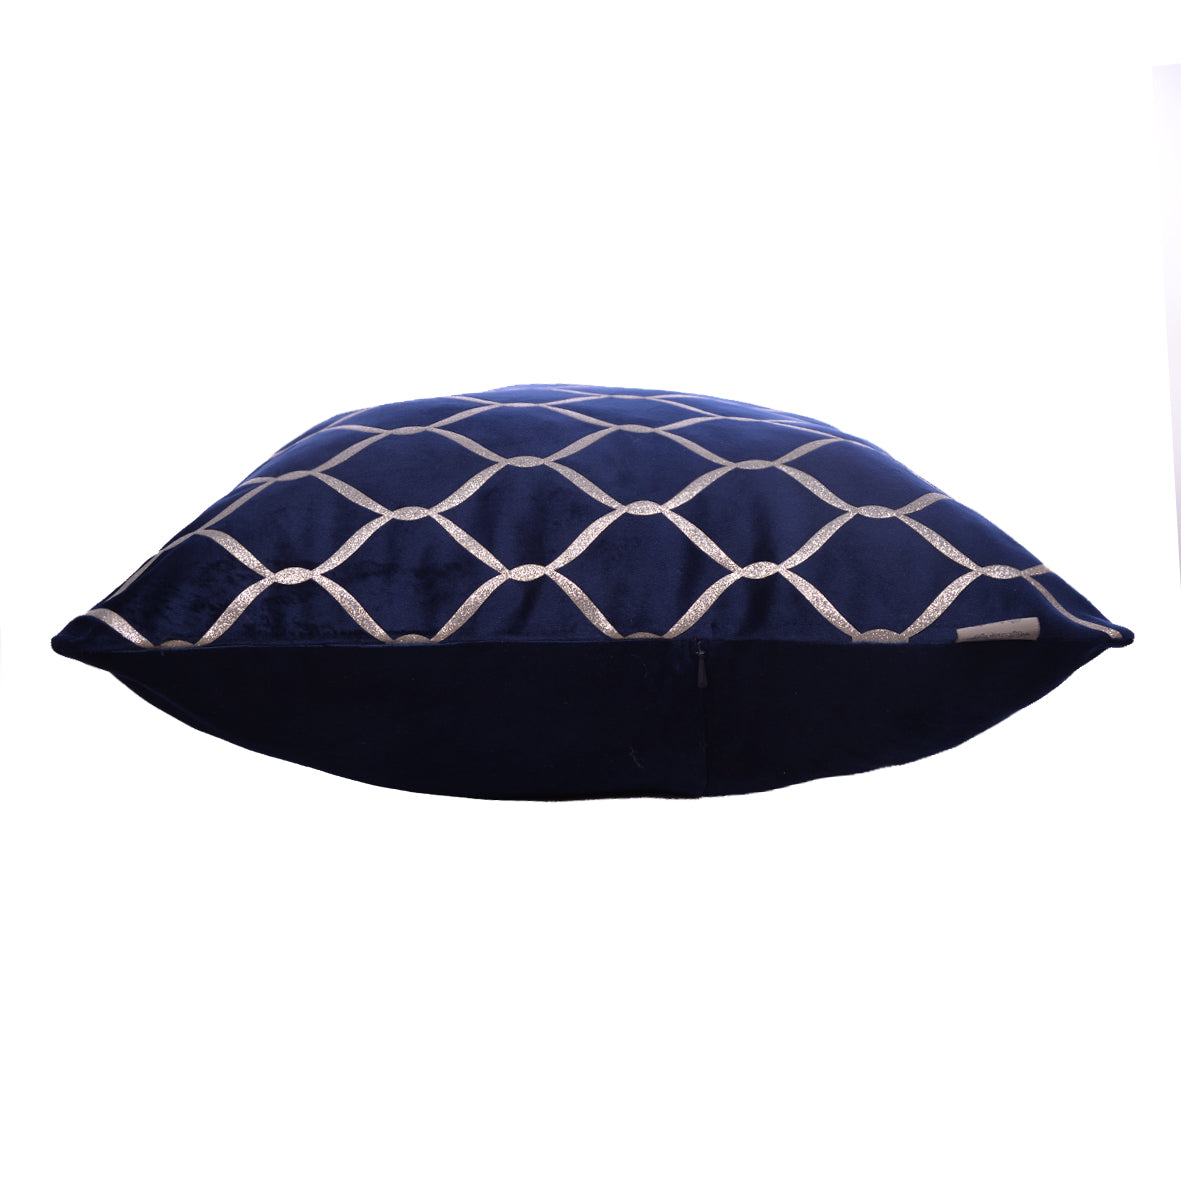 Luxury Velvet Throw Pillow Cover (Blue &  Silver Cushion Cover)